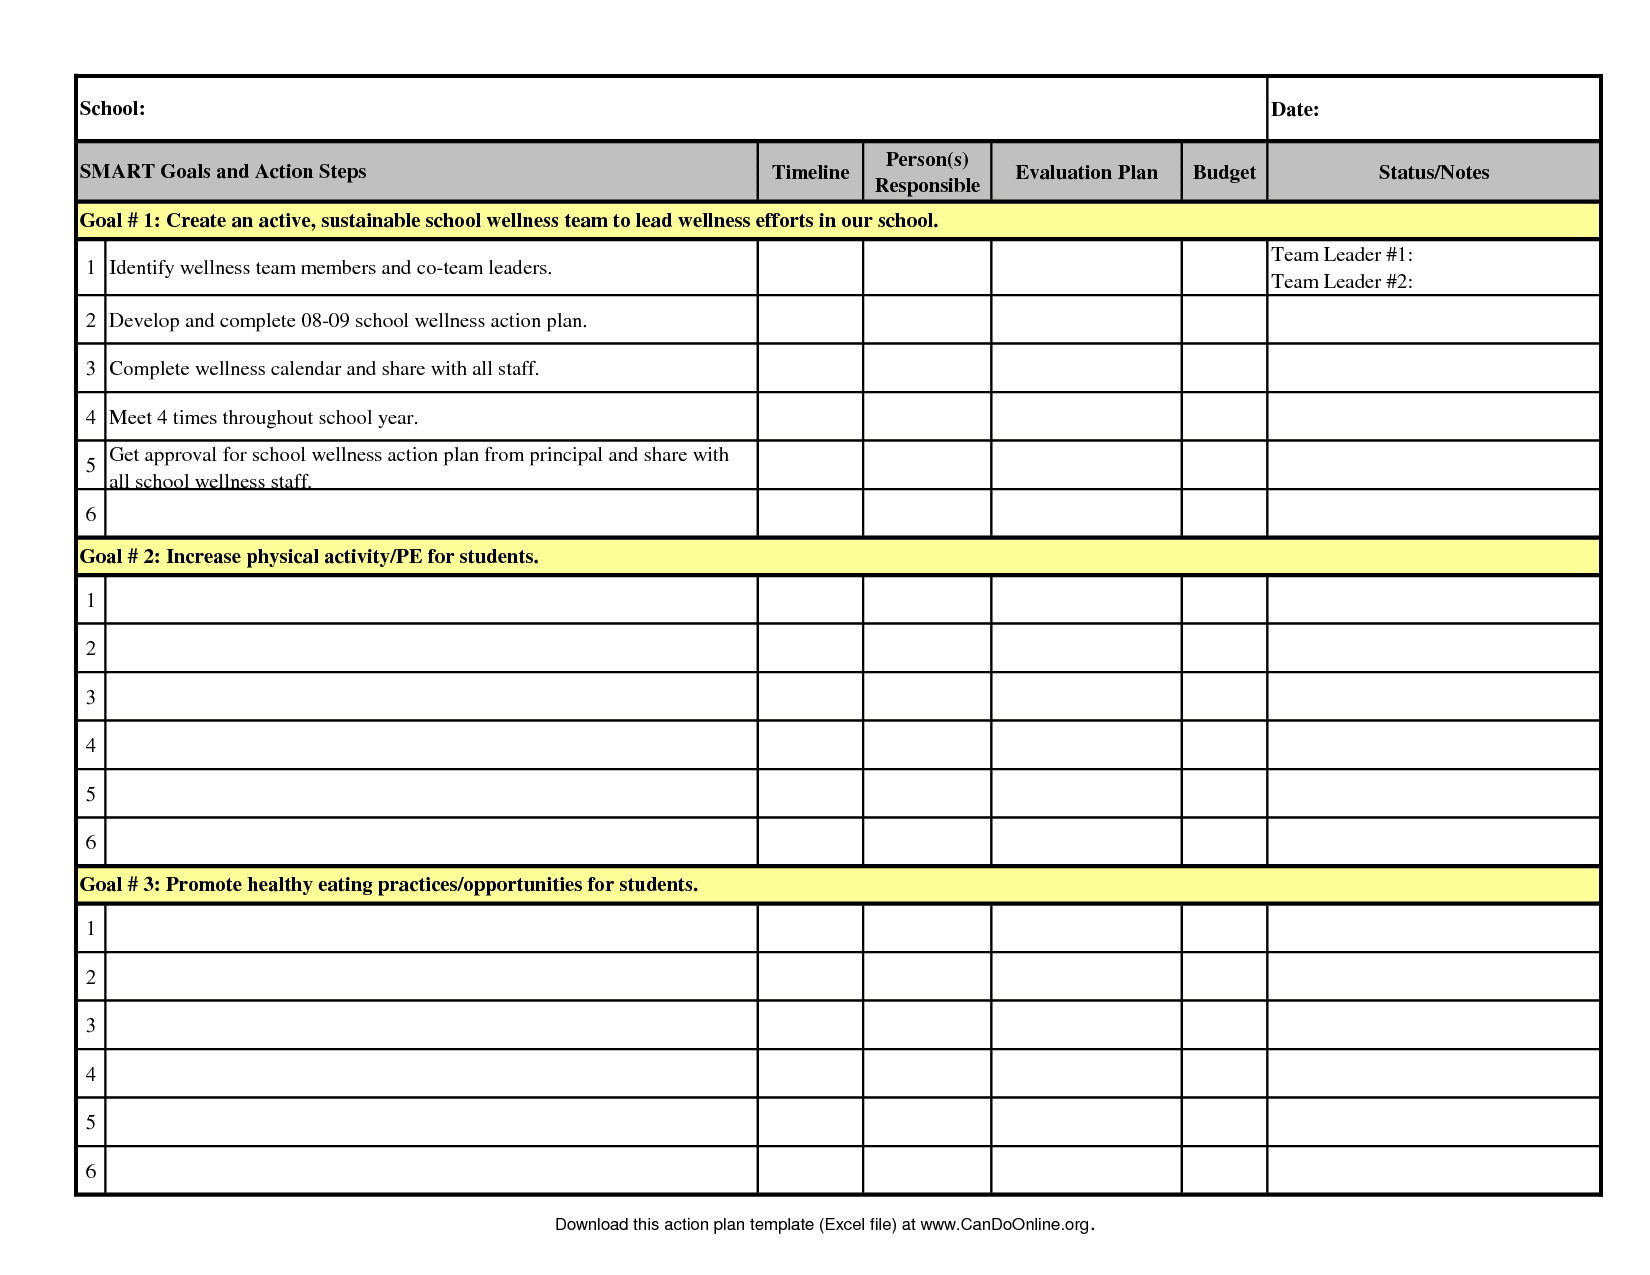 advanced-excel-spreadsheet-templates-excel-spreadsheet-templates-www